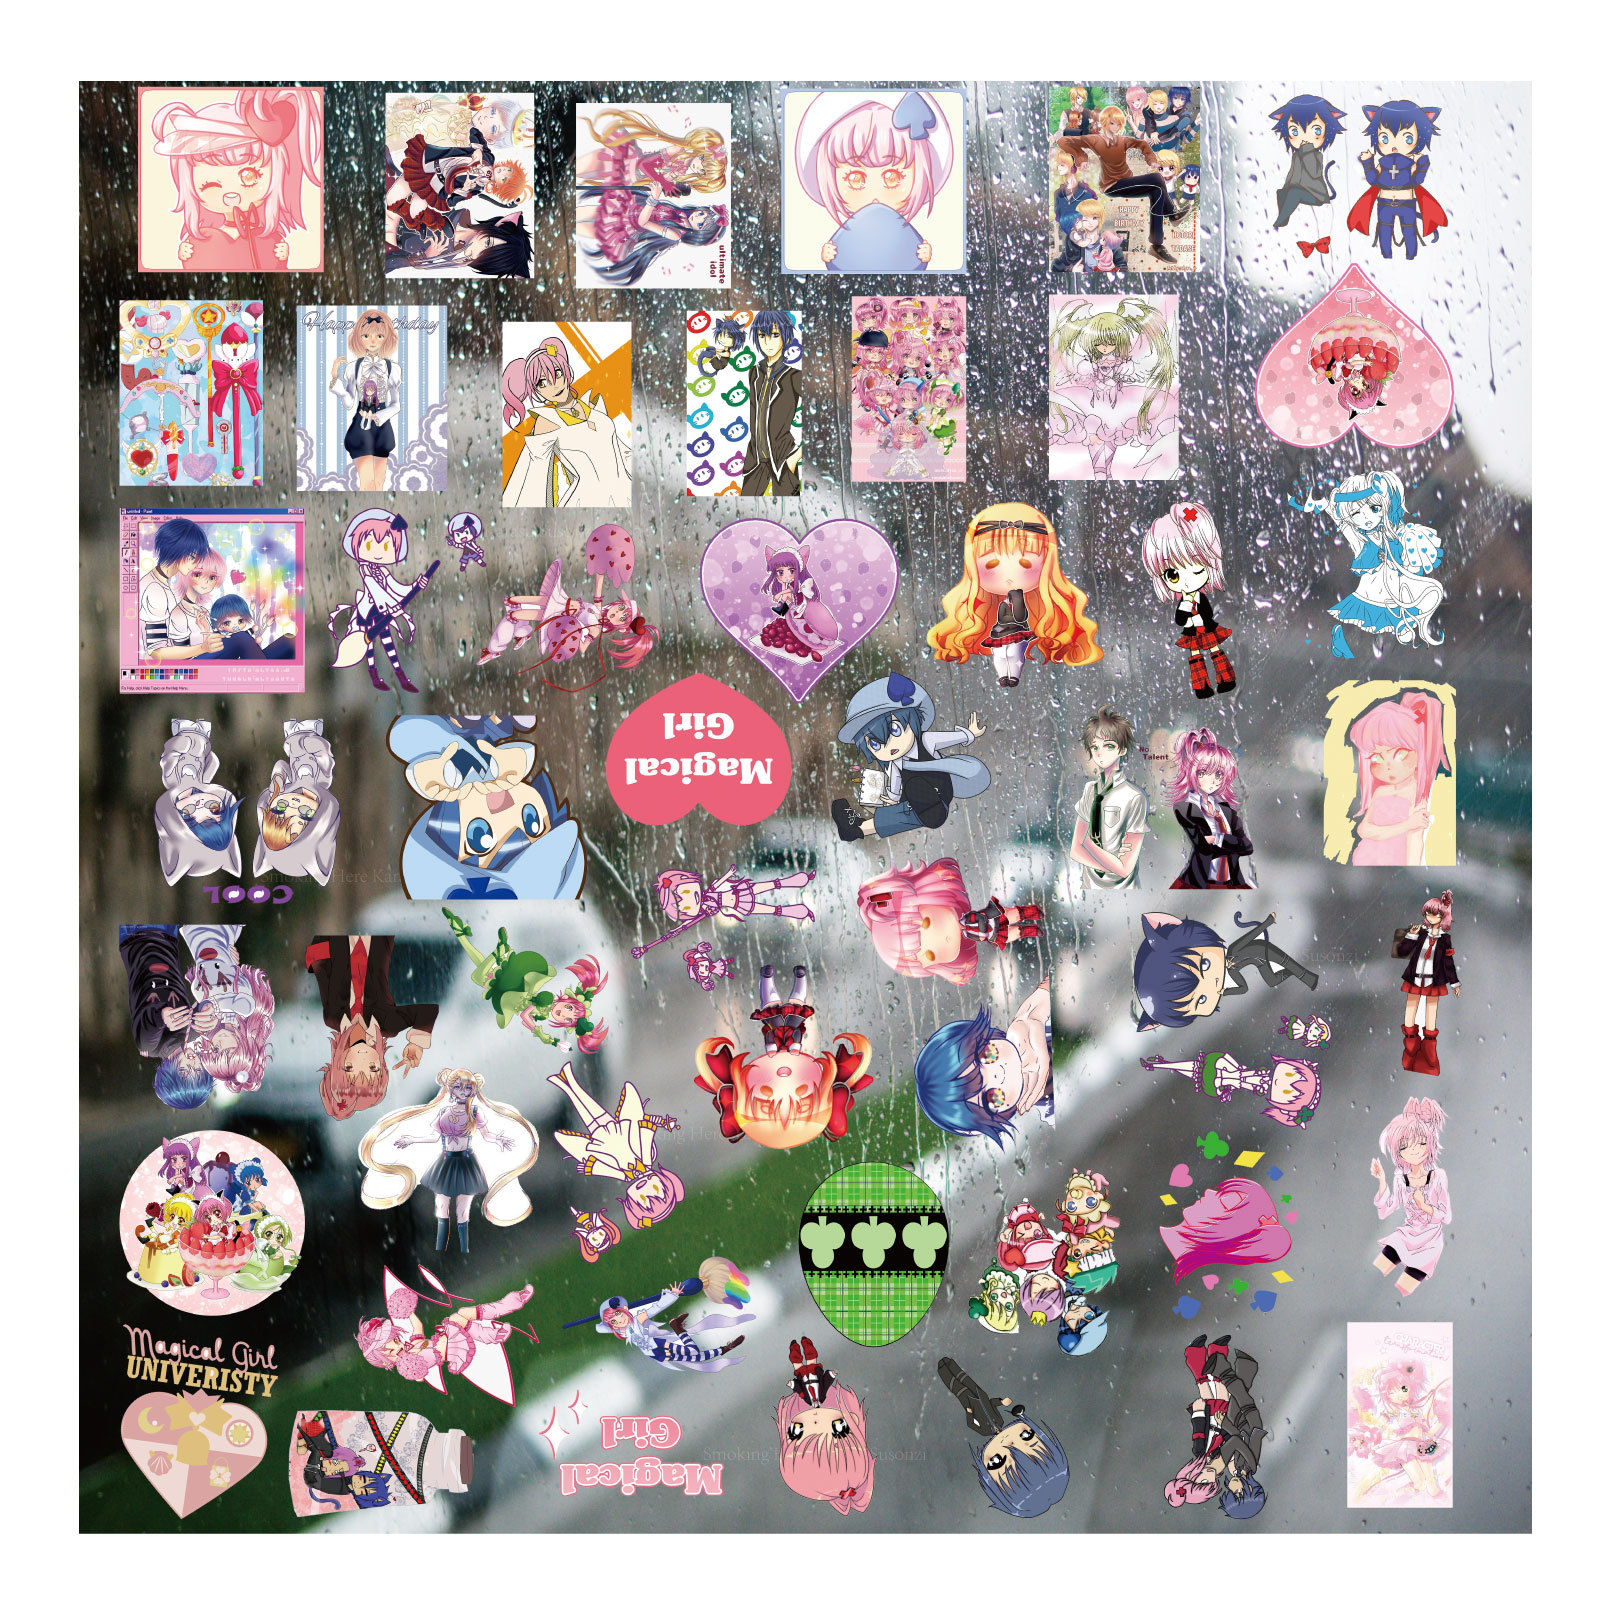 Shugo Chara anime 3D sticker price for a set of 52 pcs